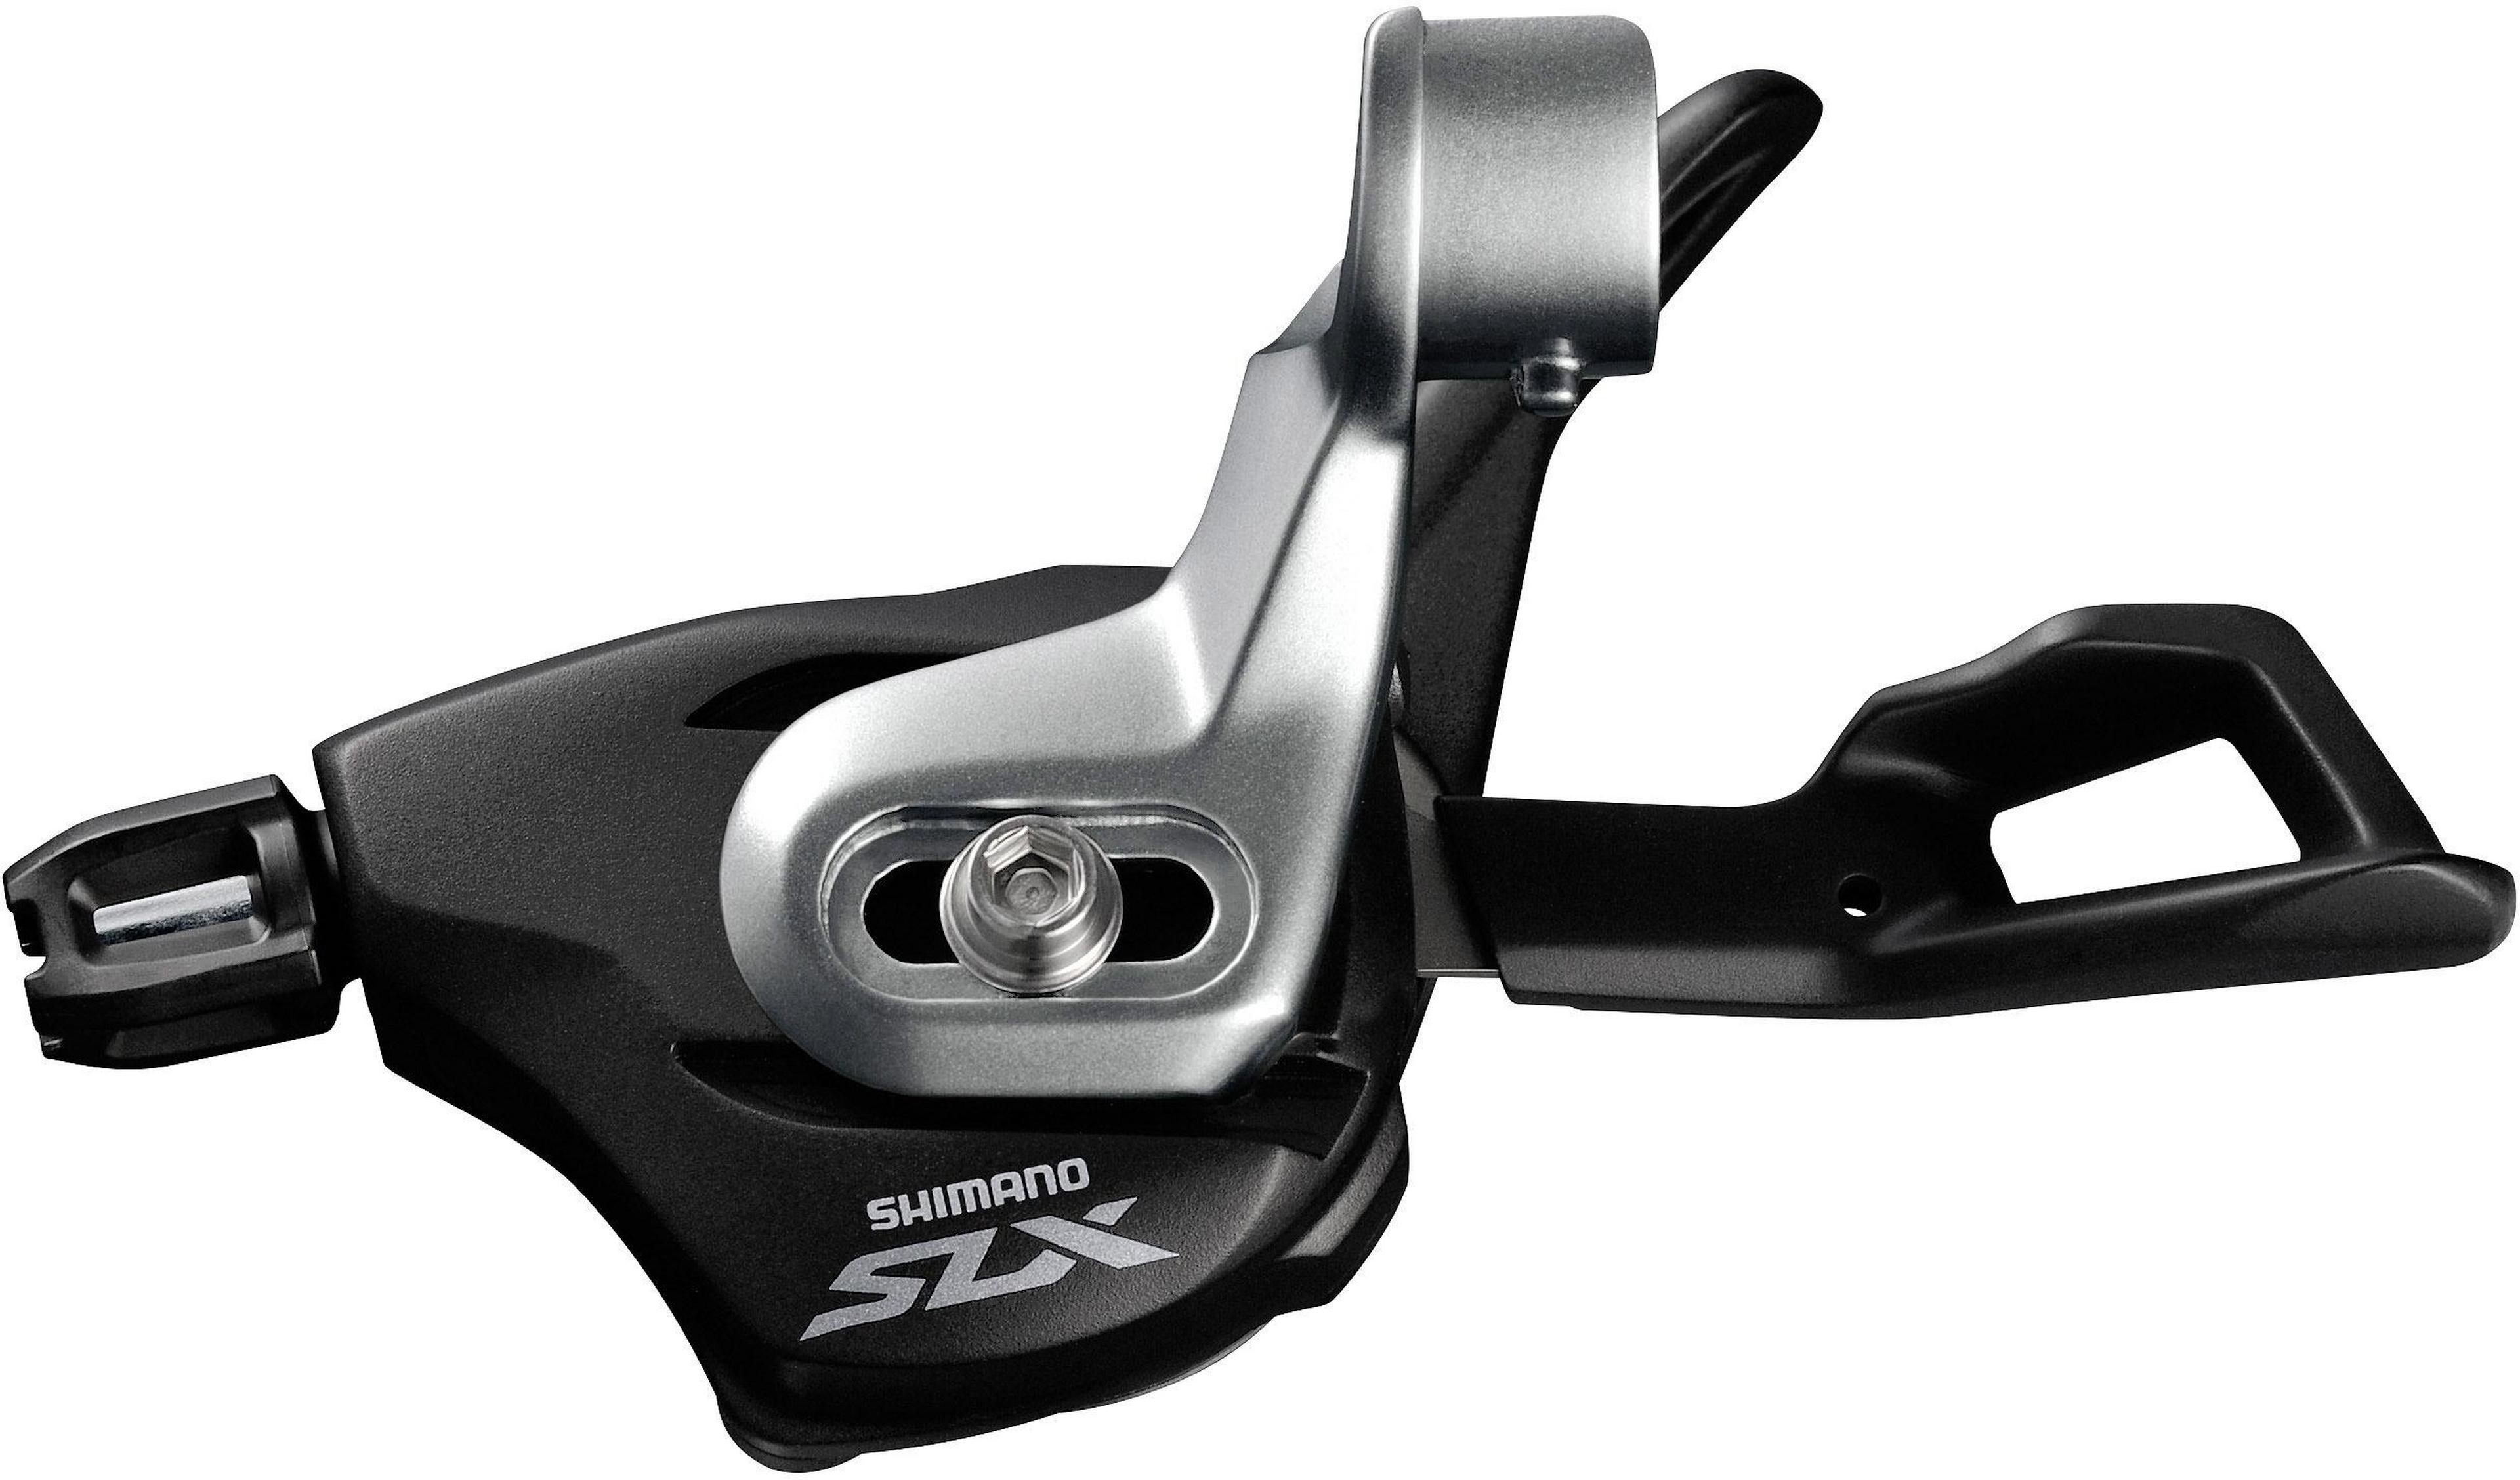 Shimano SLX M7000 11 Speed Left Hand Shifter